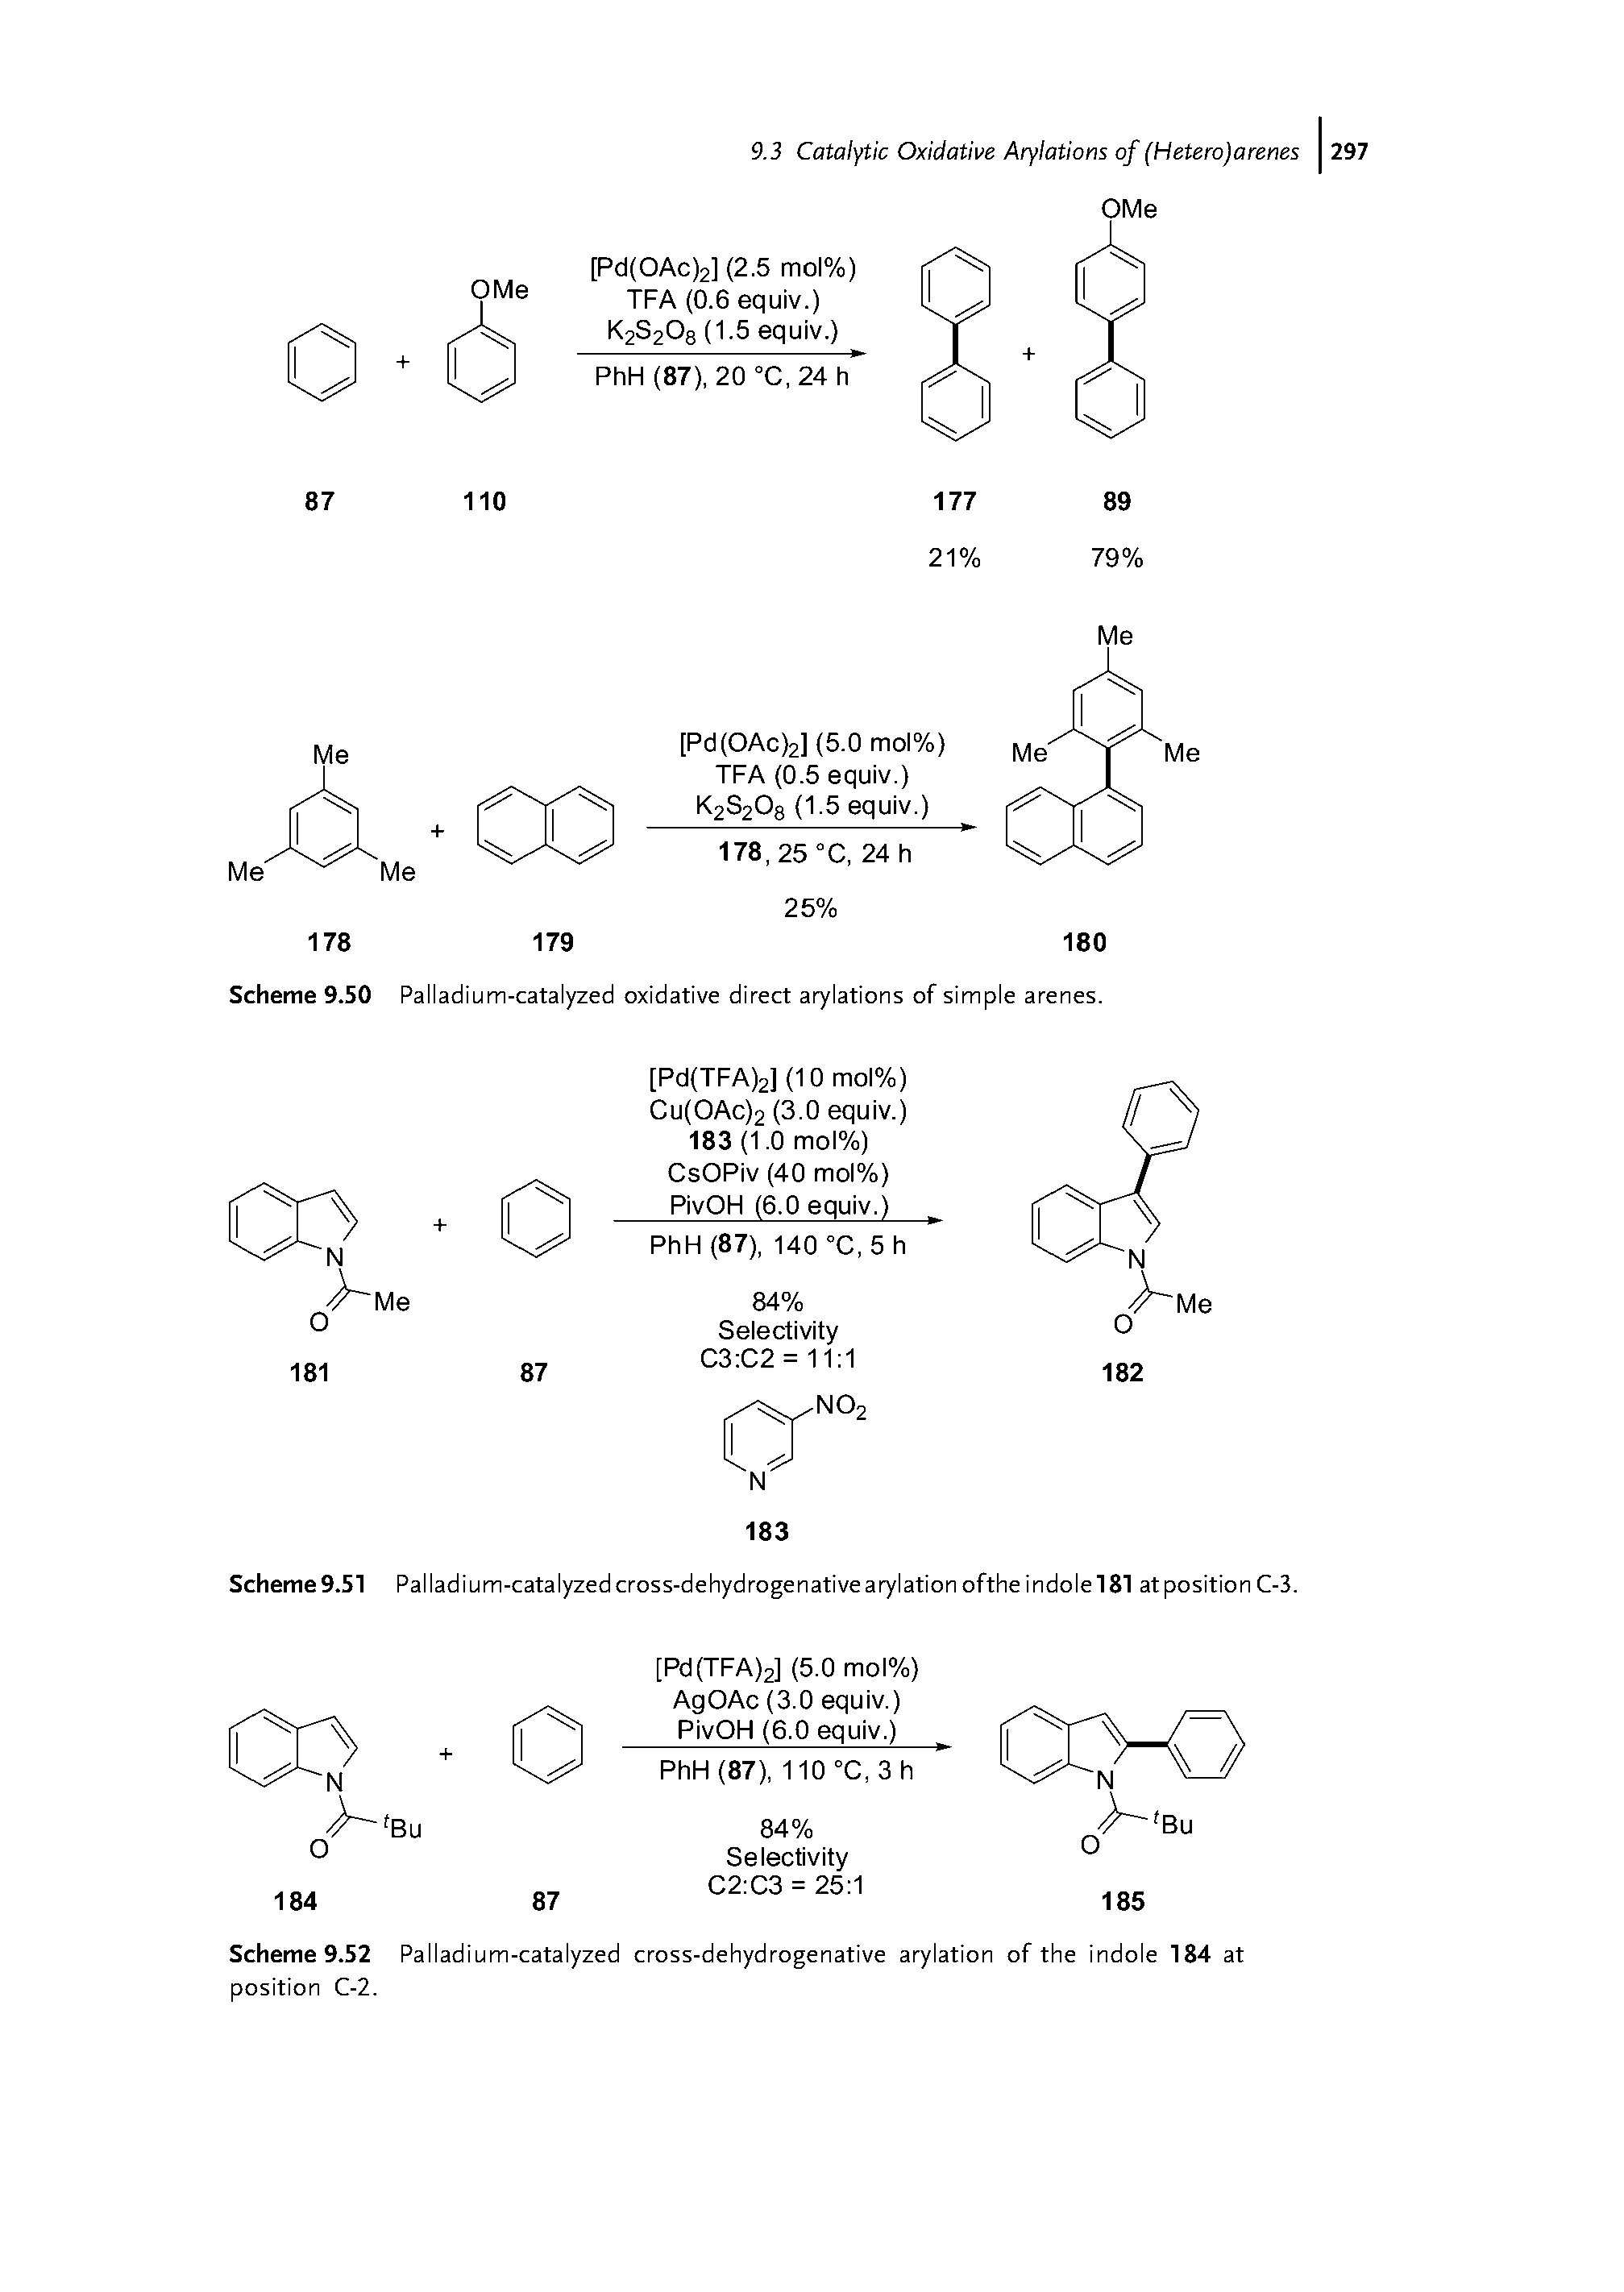 Scheme 9.52 Palladium-catalyzed cross-dehydrogenative arylation of the indole 184 at position C-2.